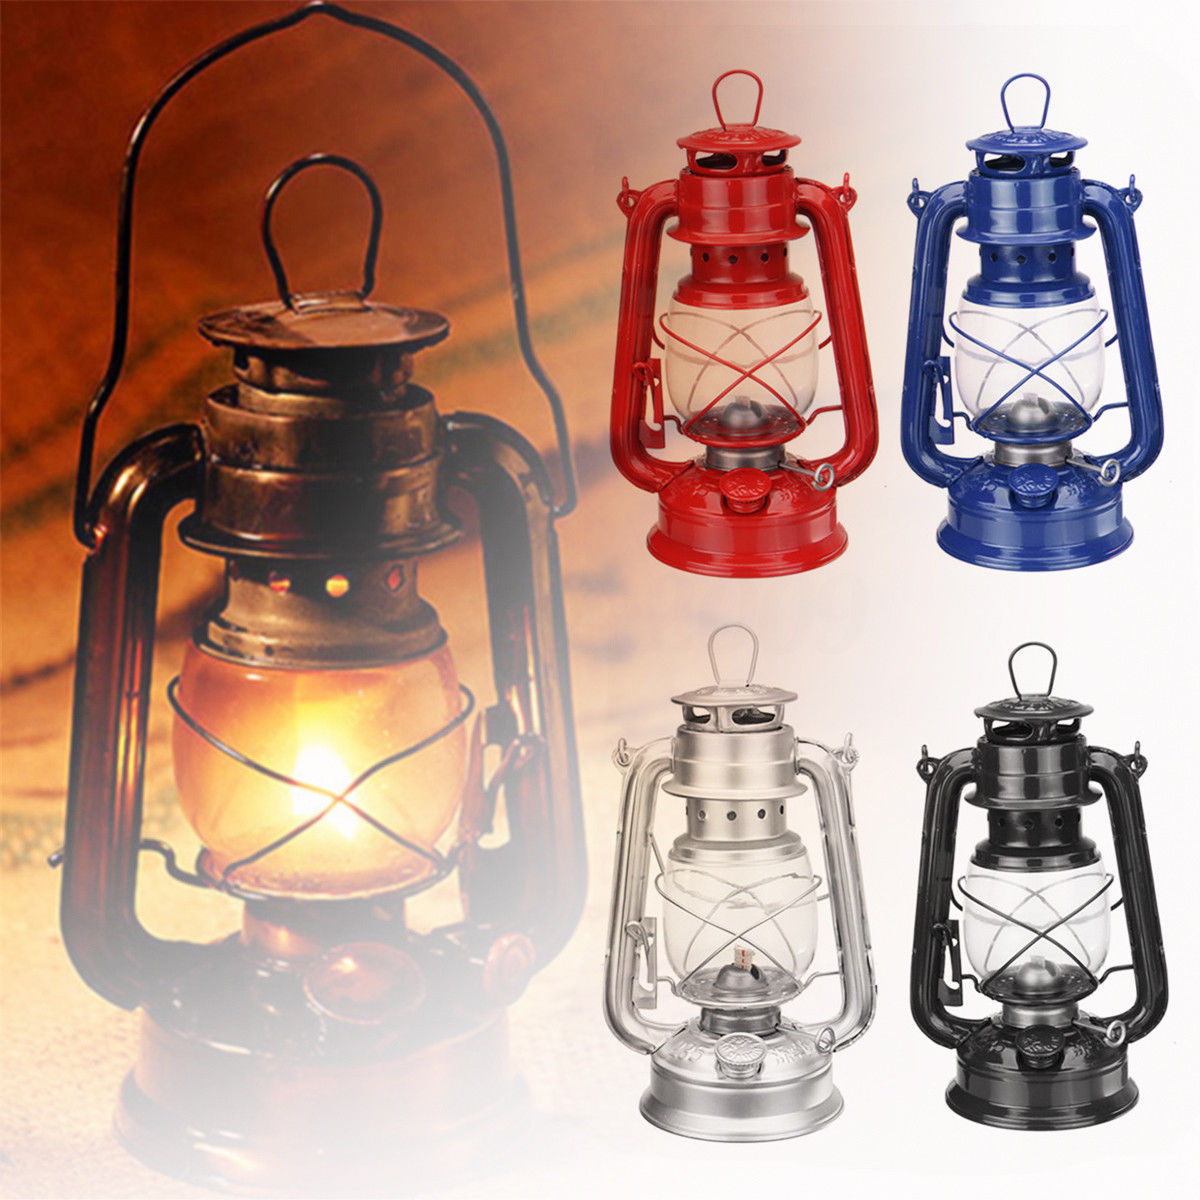 Vintage-Oil-Lamp-Lantern-Kerosene-Paraffin-Hurricane-Lamp-Light-Outdoor-Camping-1345072-1